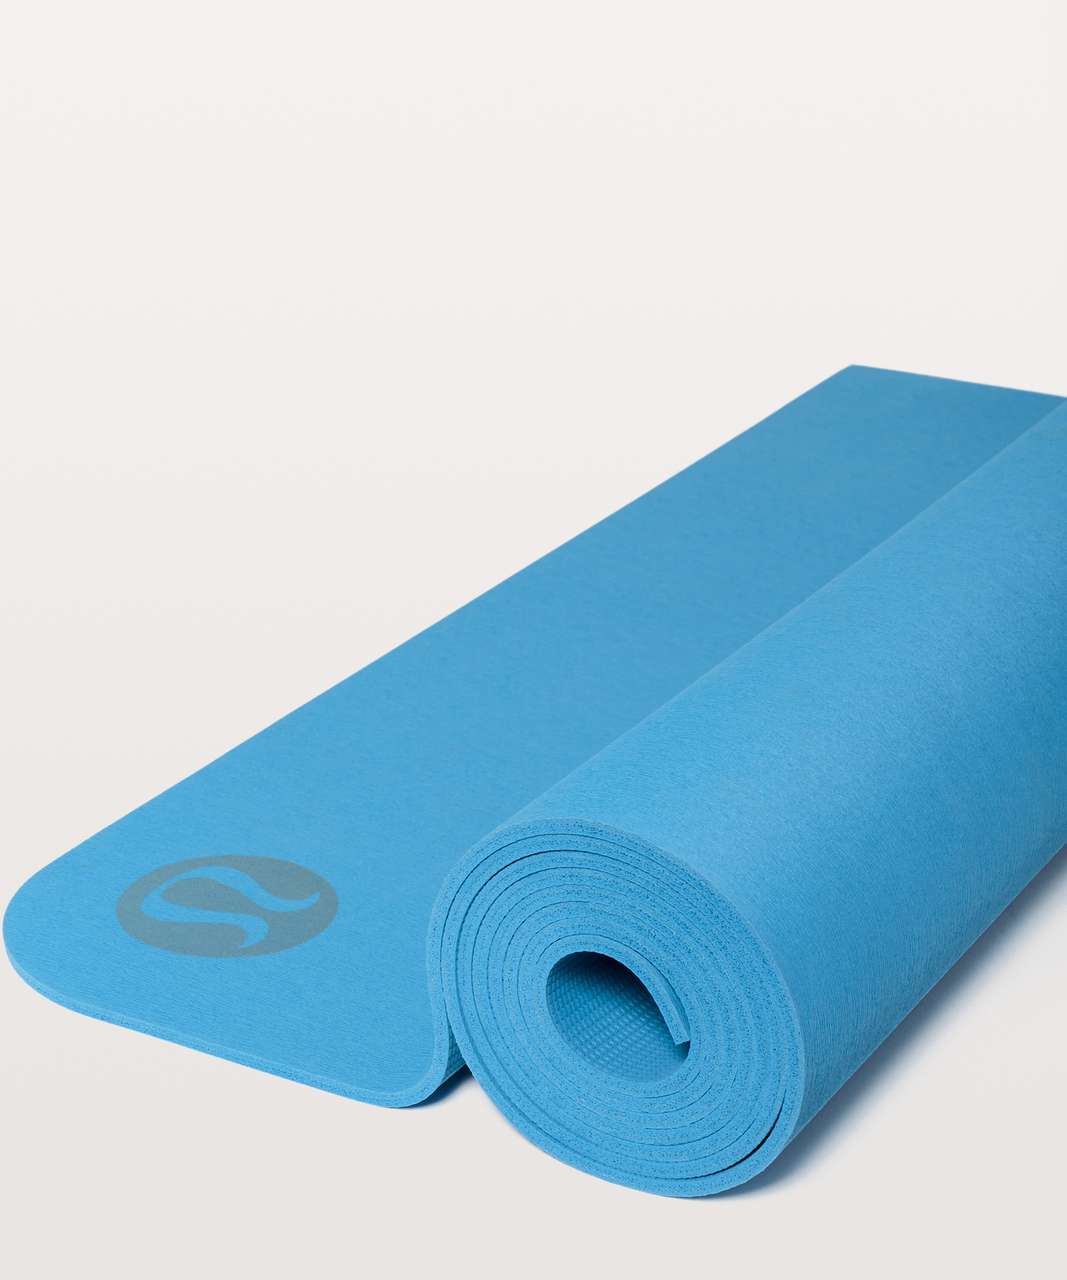 Lululemon Arise Yoga Mat 5mm FSC-certified Natural Rubber - Black